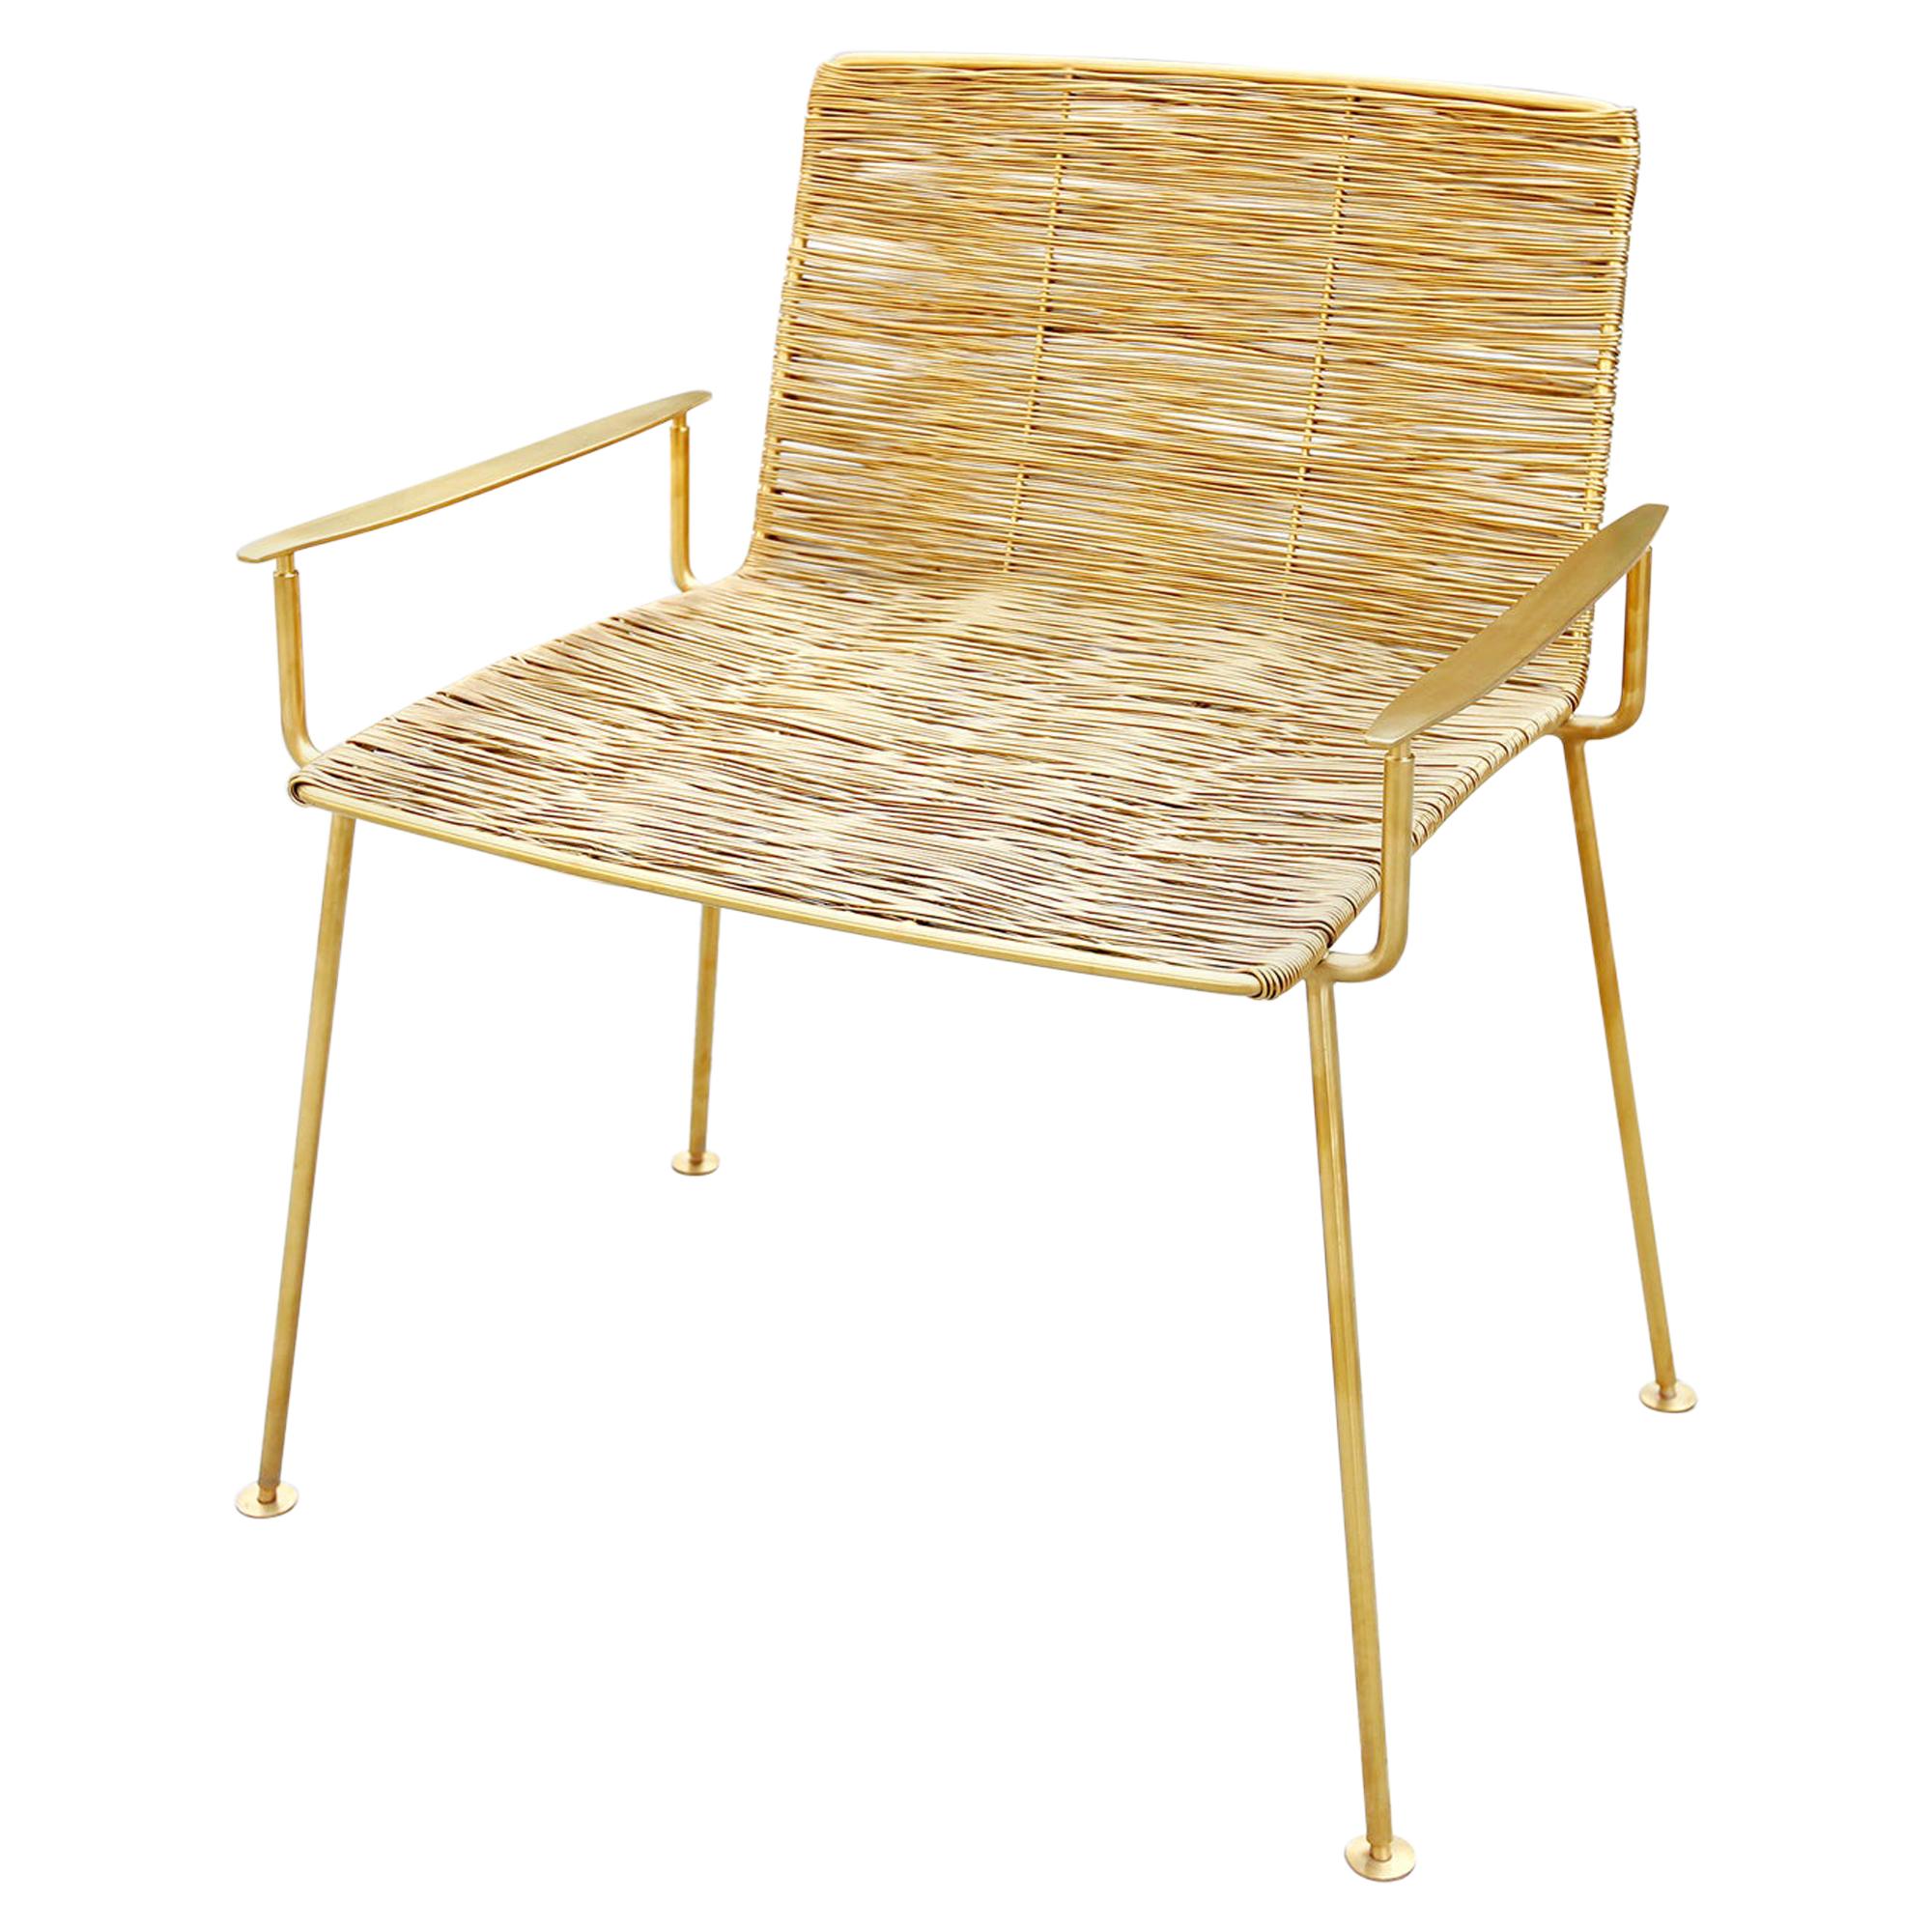 Gold Boy Garden Chair in Gold Titanium Finish - Modern-Classy Look Outdoor Chair